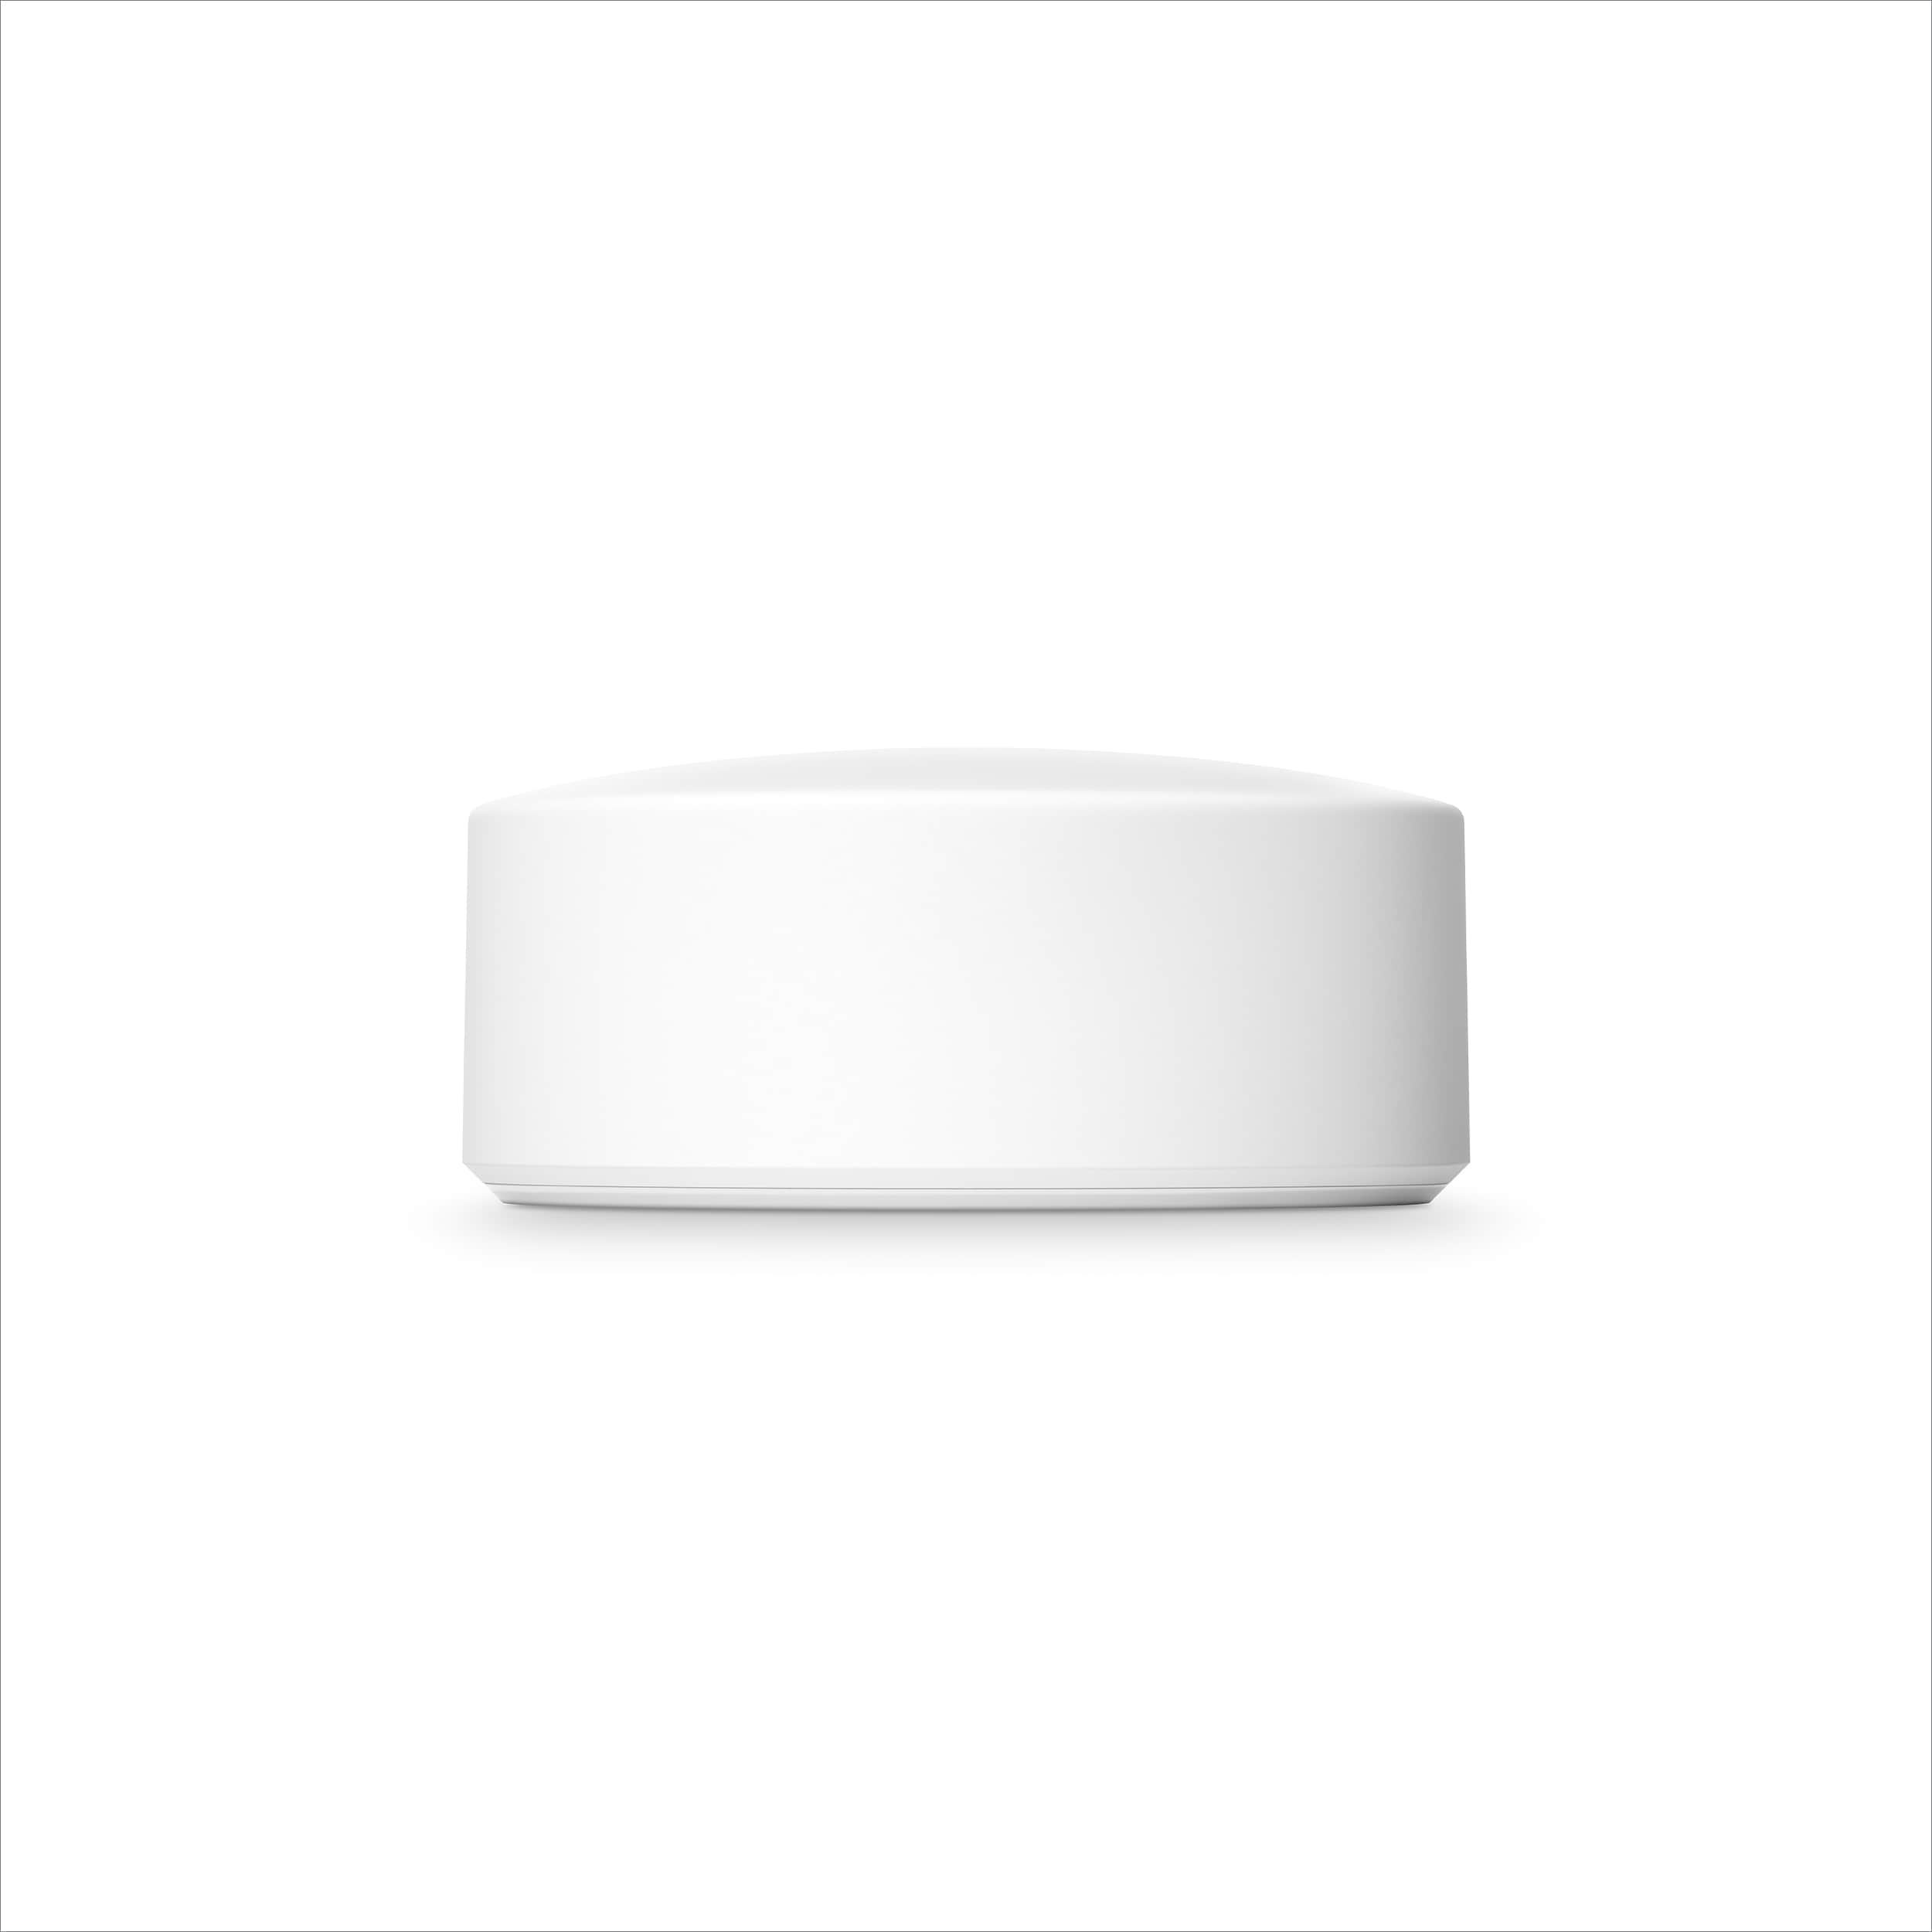 Google Nest Temperature Sensor (3-Pack) T5001SF B&H Photo Video